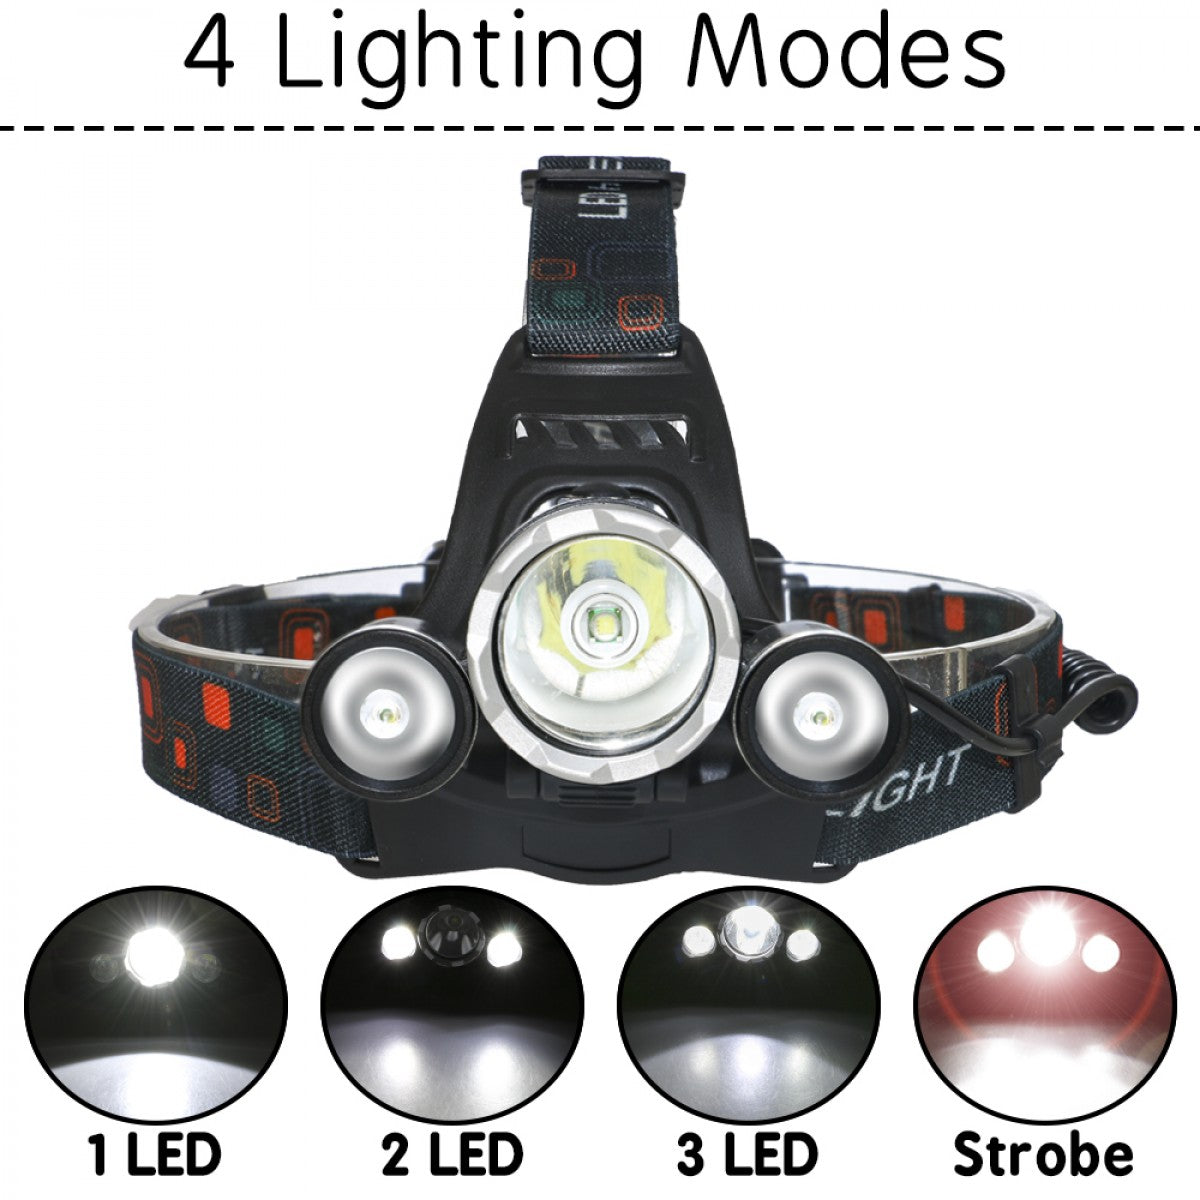 P3 Headlight Adjustable brightness